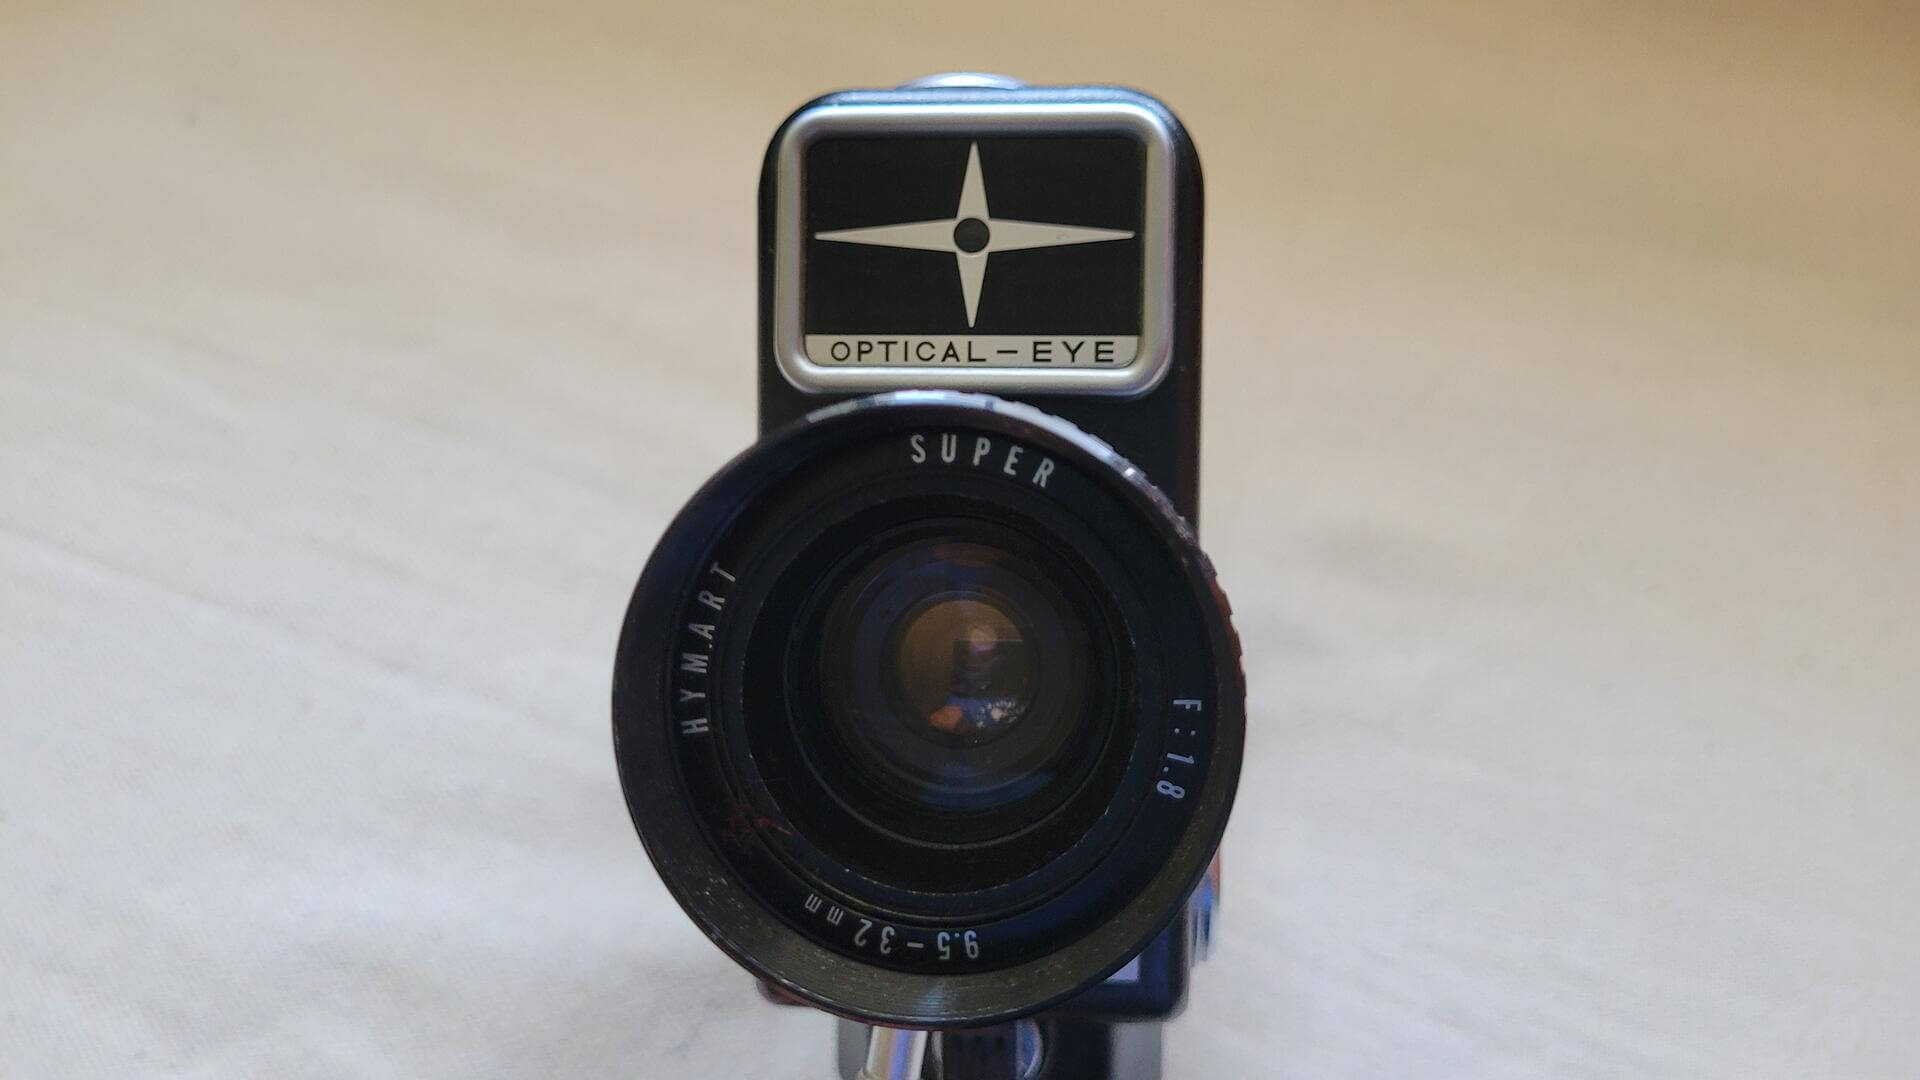 1960s Hymart 135 Silent Super 8 Movie Camera with original case - Rare retro made in Japan collectible video recorder and super 8 cameras